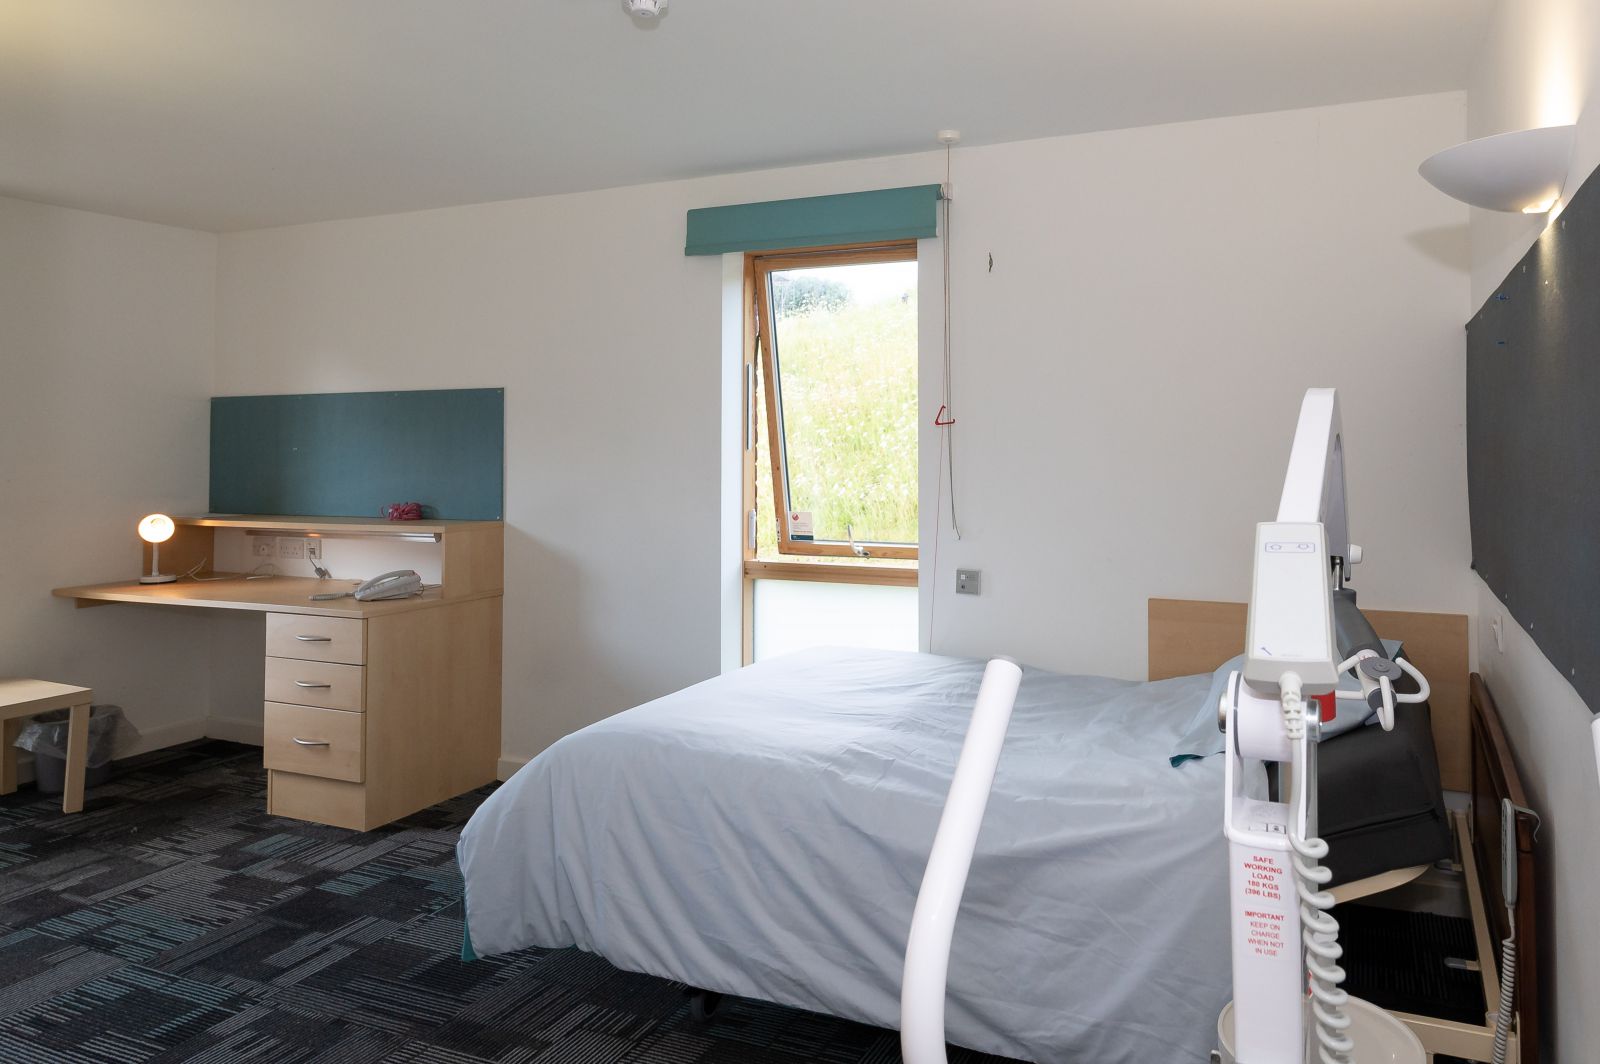 A Northfield accessible bedroom